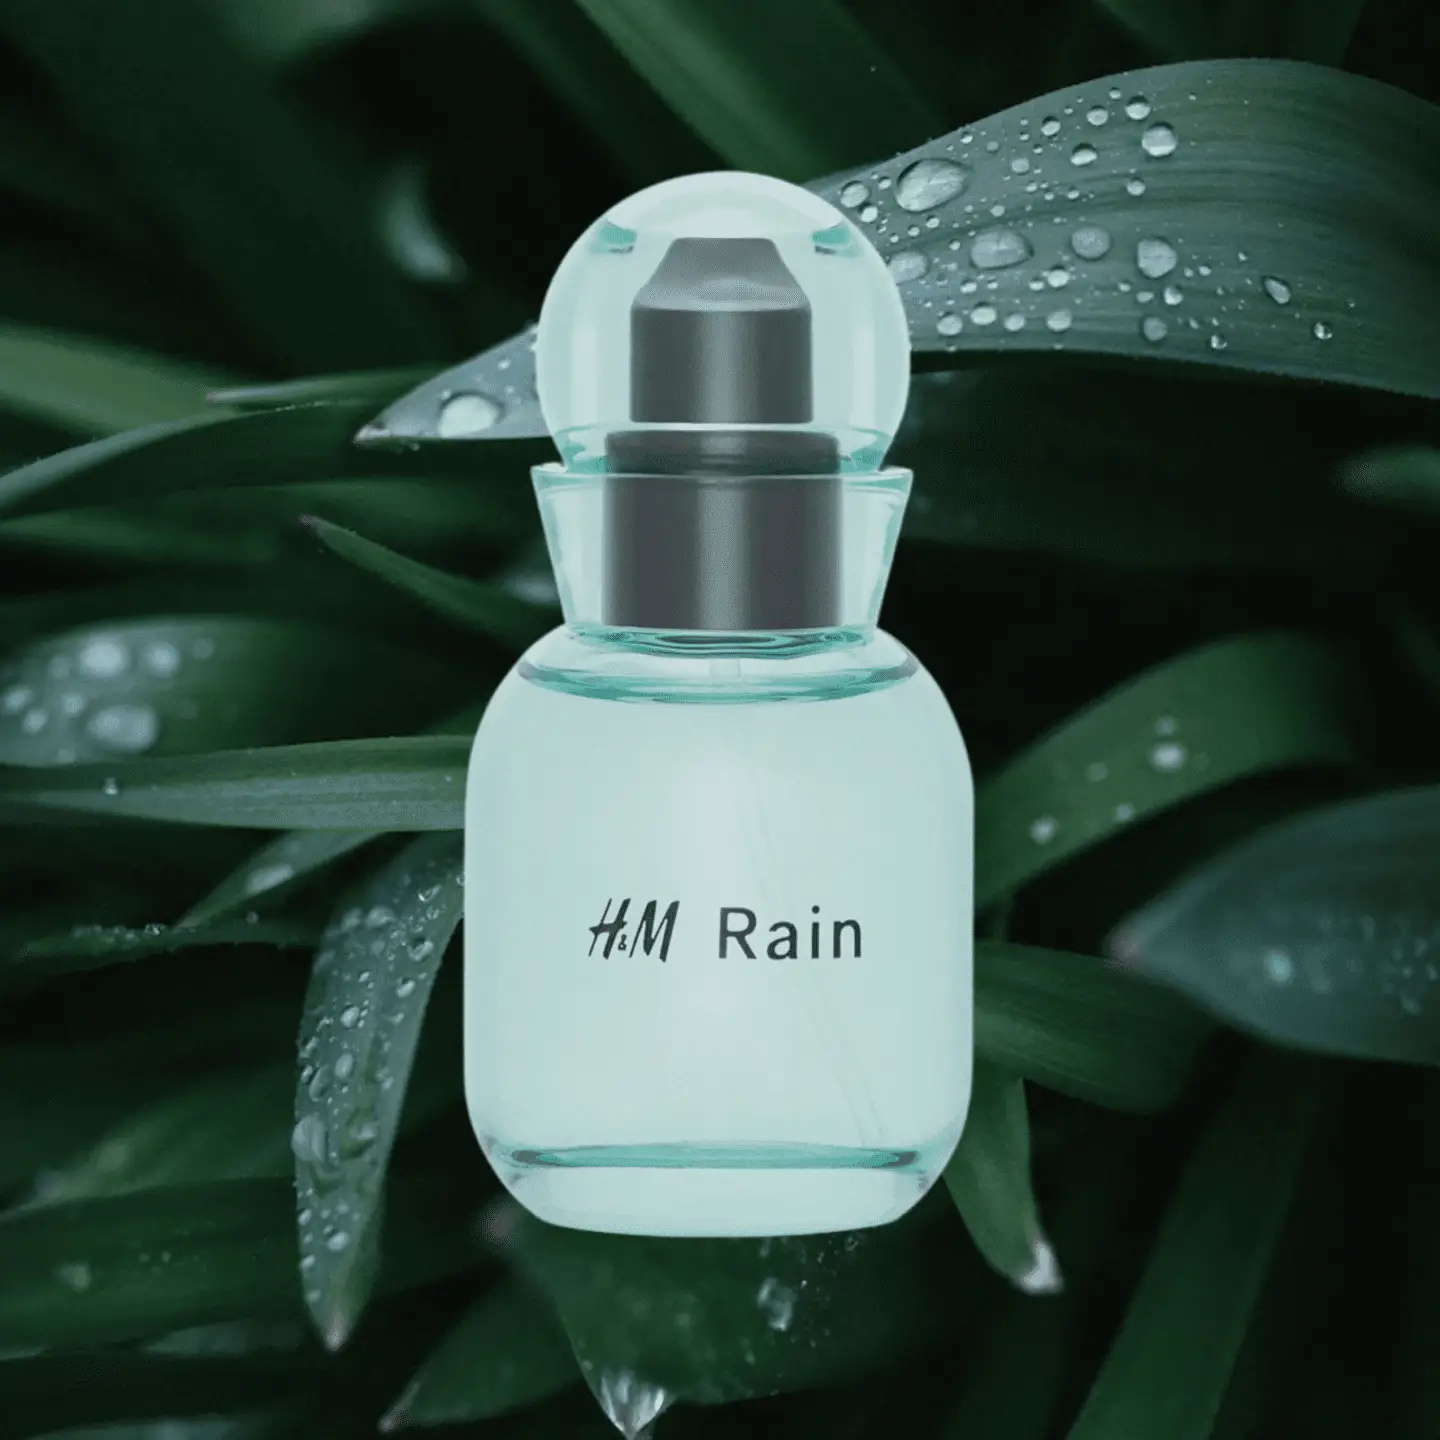 HM-Rain-fragrance
Perfumes That Smell Like Rain
Petrichor